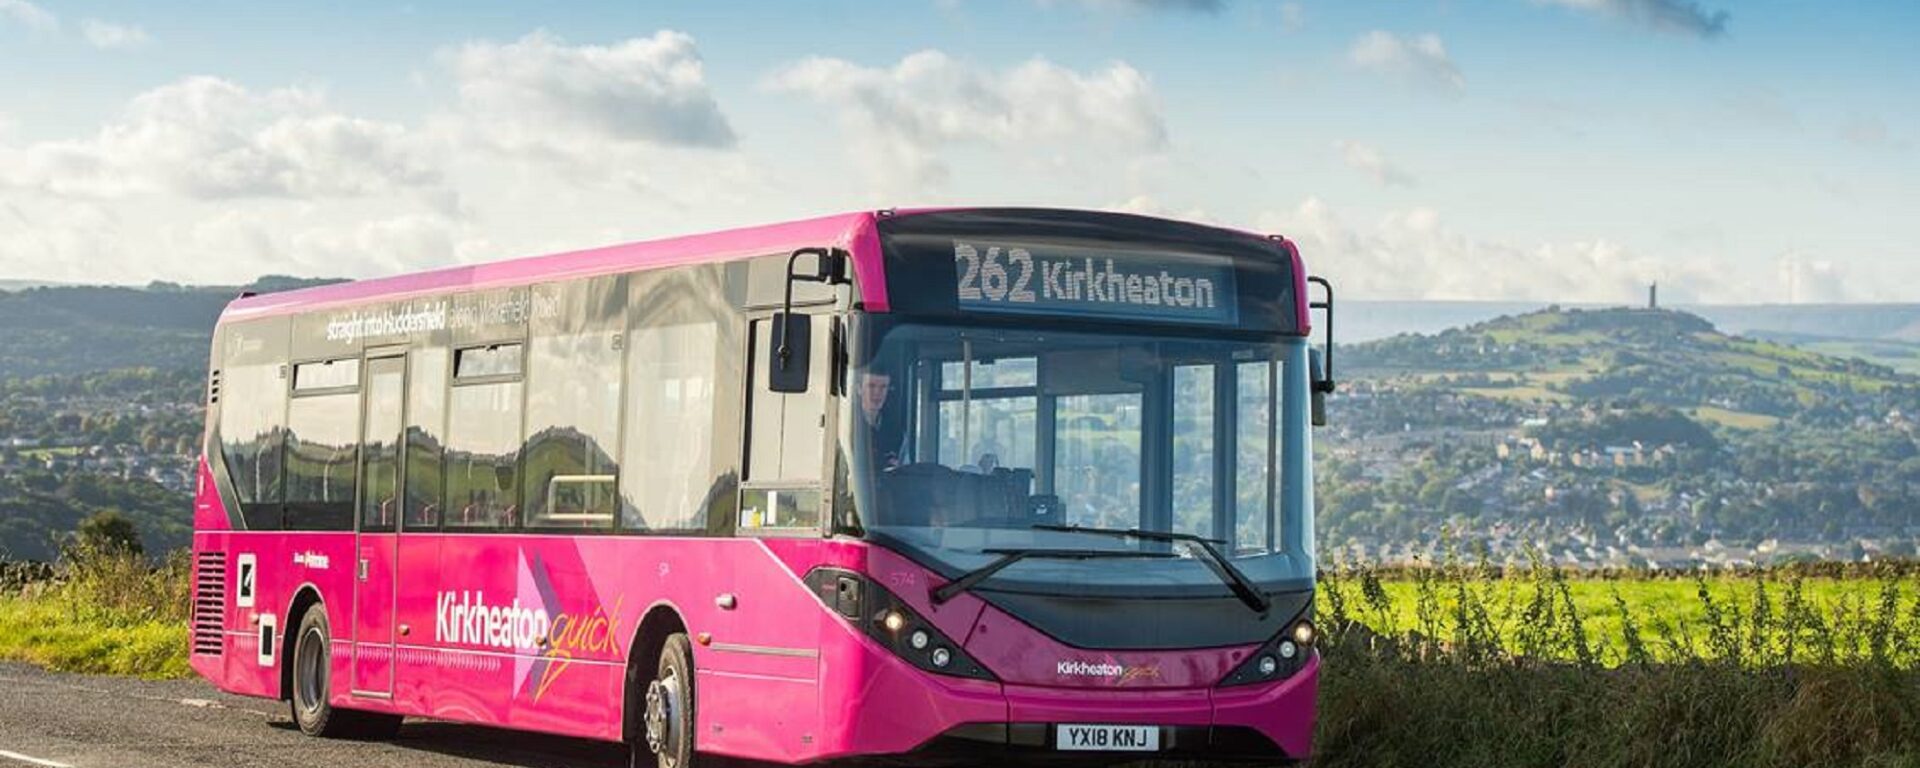 kirkheaton-quick-bus